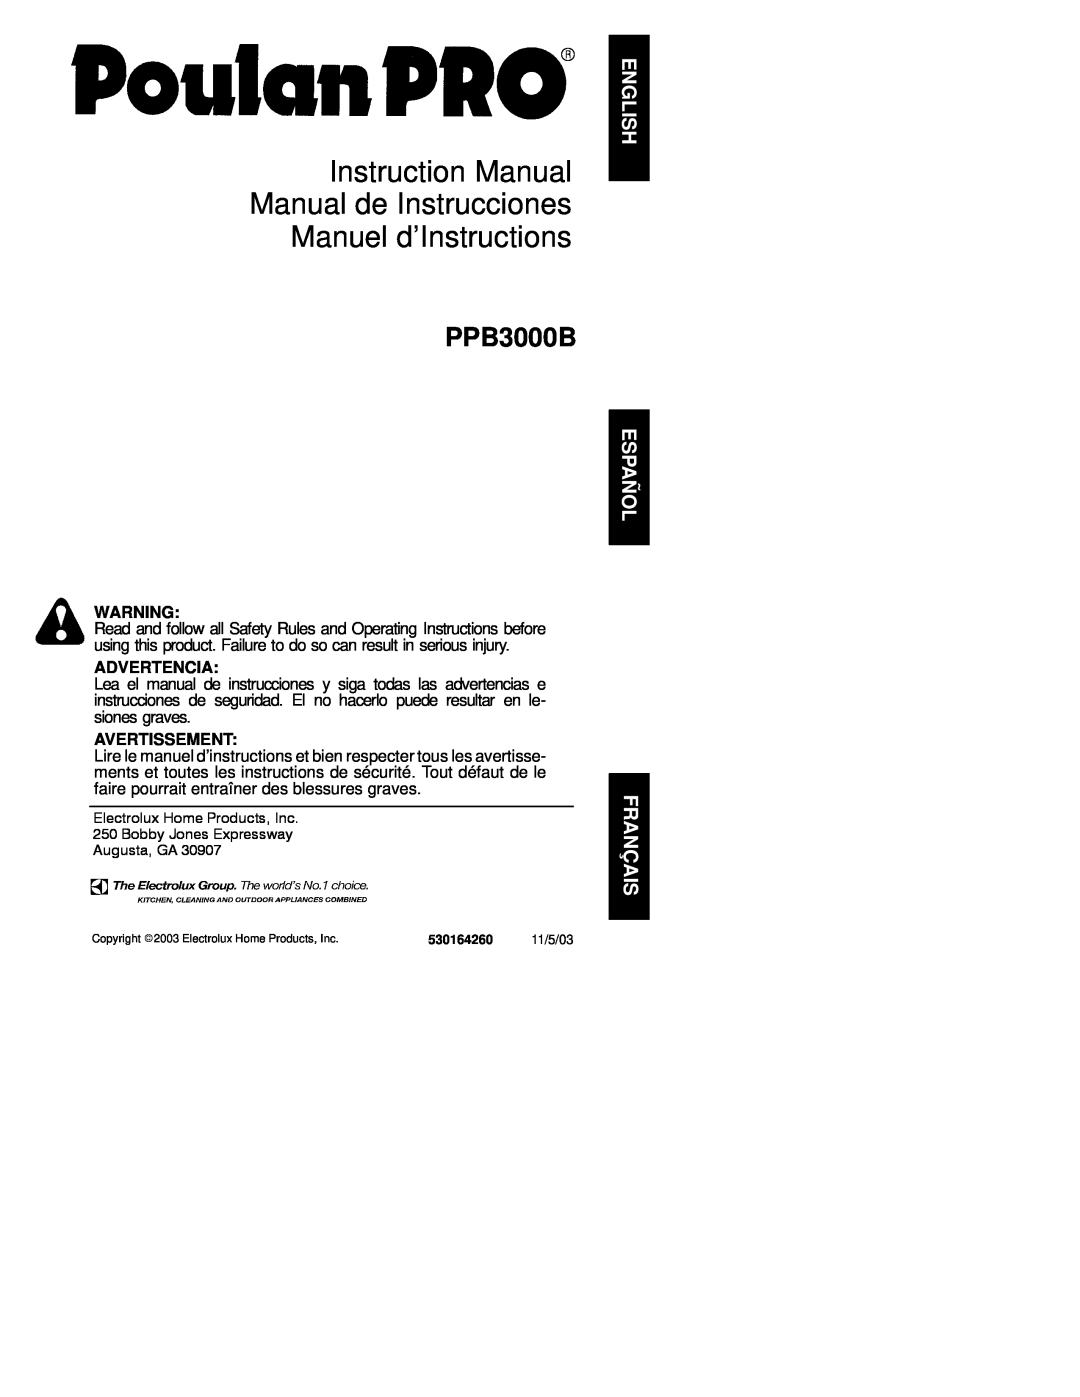 Poulan 530164260 instruction manual PPB3000B, Advertencia, Avertissement 